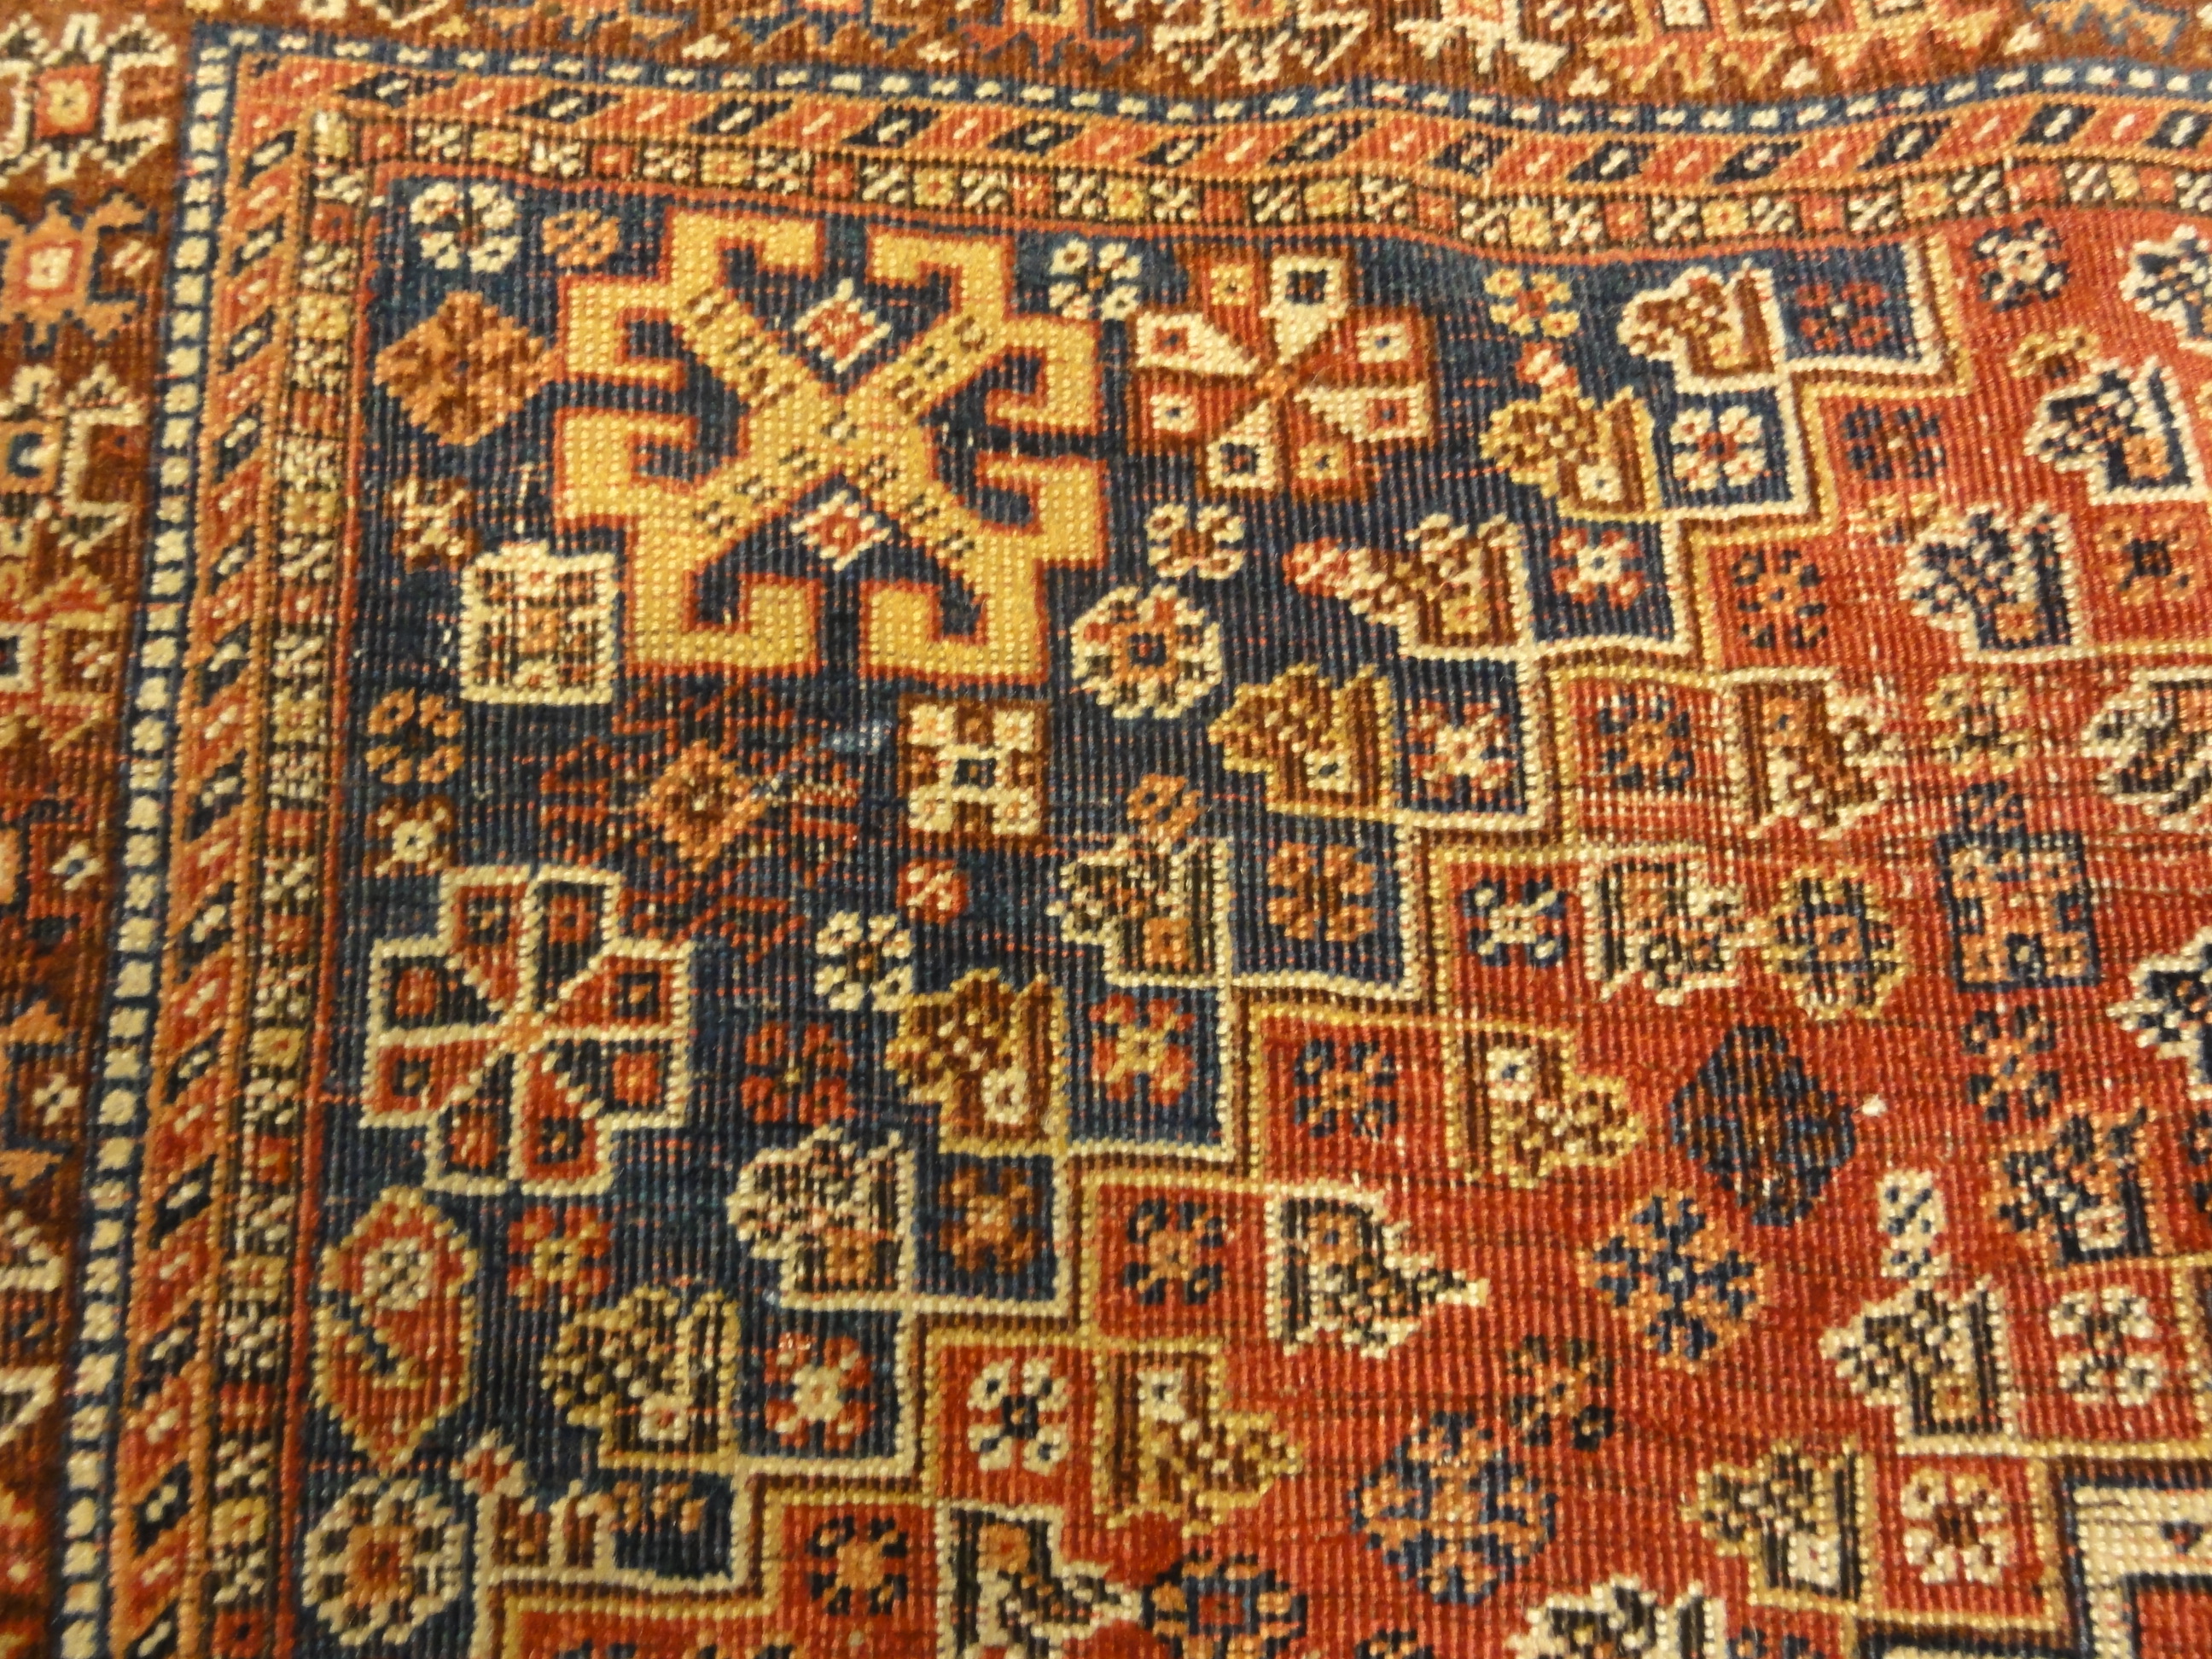 Antique Persian Qashqai Rug. A piece of genuine woven carpet art sold by the Santa Barbara Design Center, Rugs and More in Santa Barbara, California.